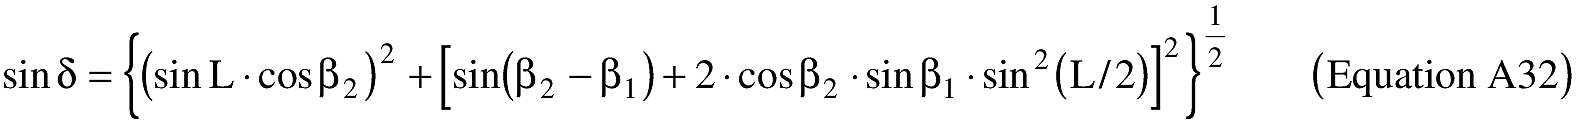 Equation for ER19OC00.039